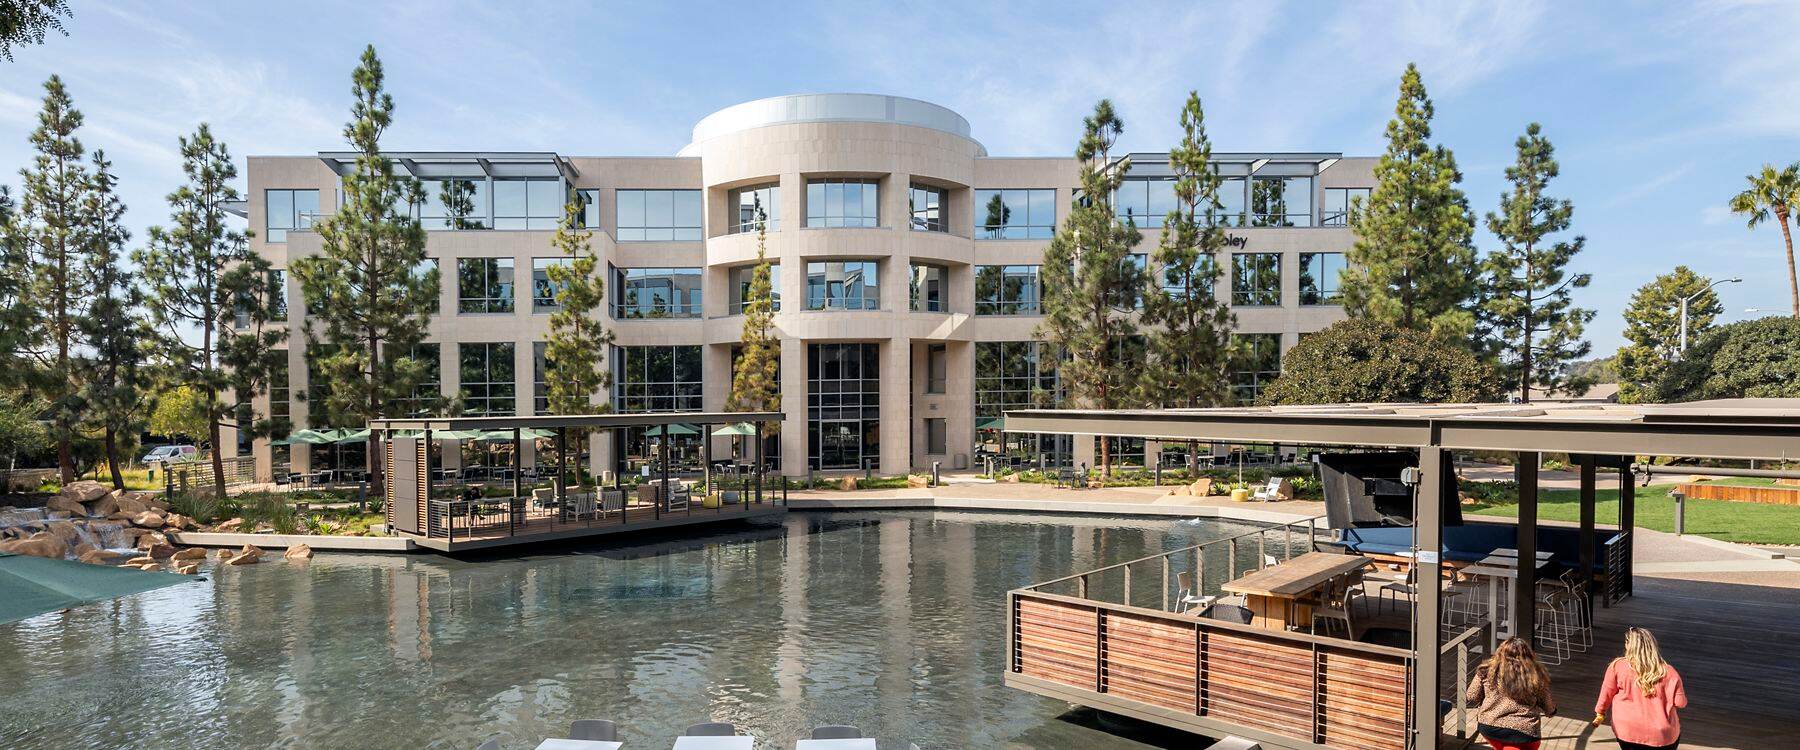 Outdoor Workspace - La Jolla Reserve - 4401, 4435, & 4445 Eastgate Mall  San Diego, CA 92121